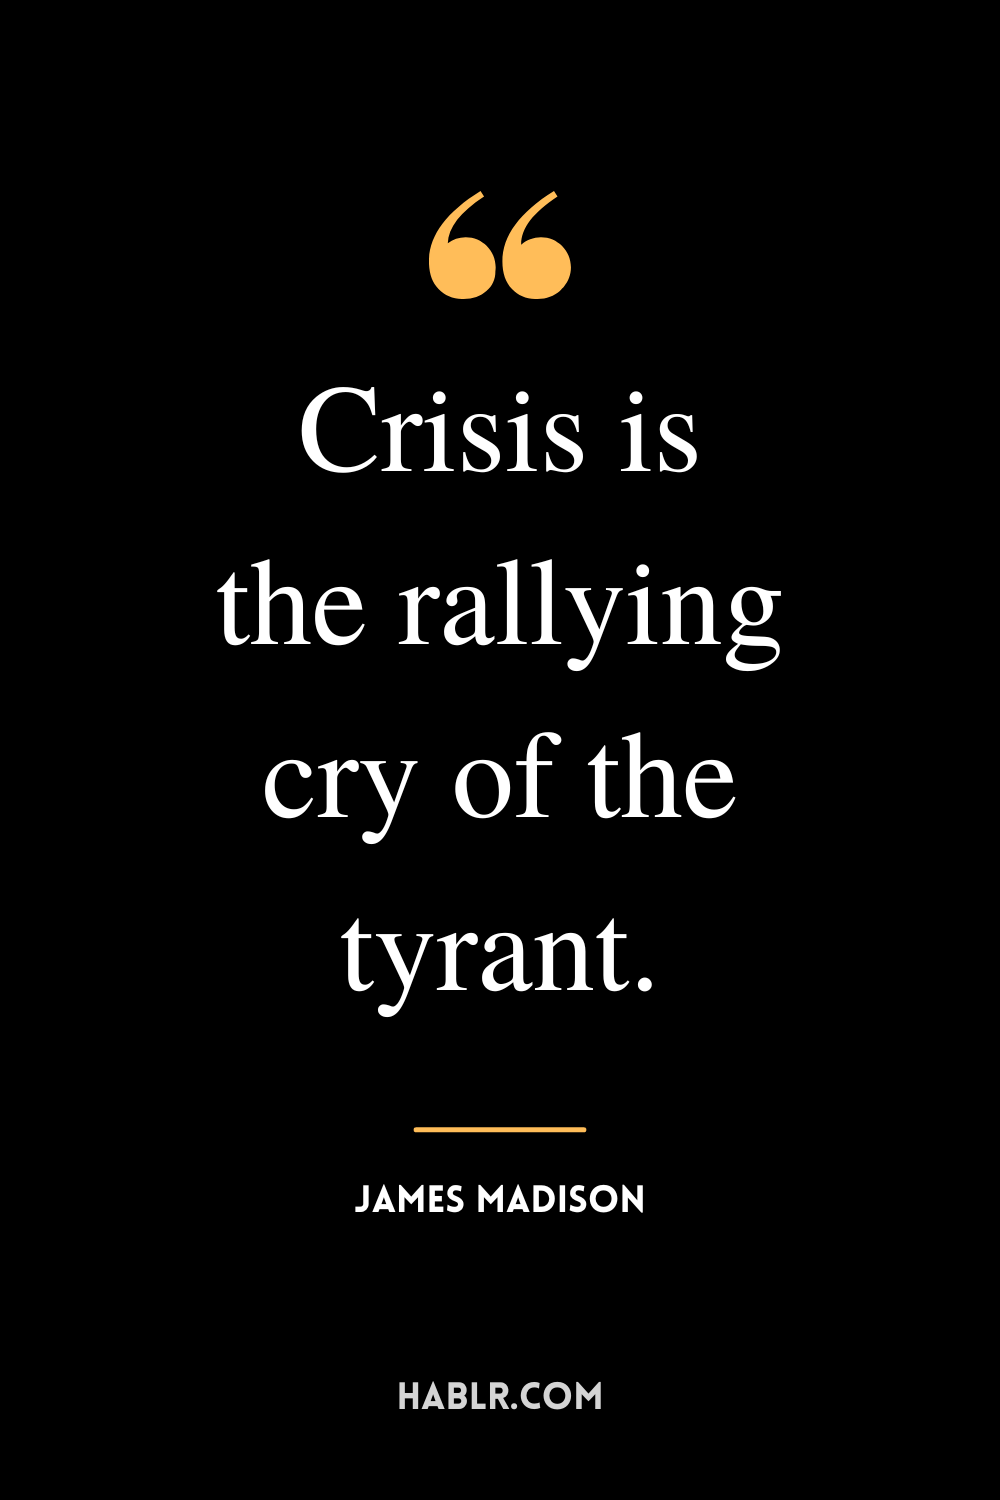 “Crisis is the rallying cry of the tyrant.”  -James Madison